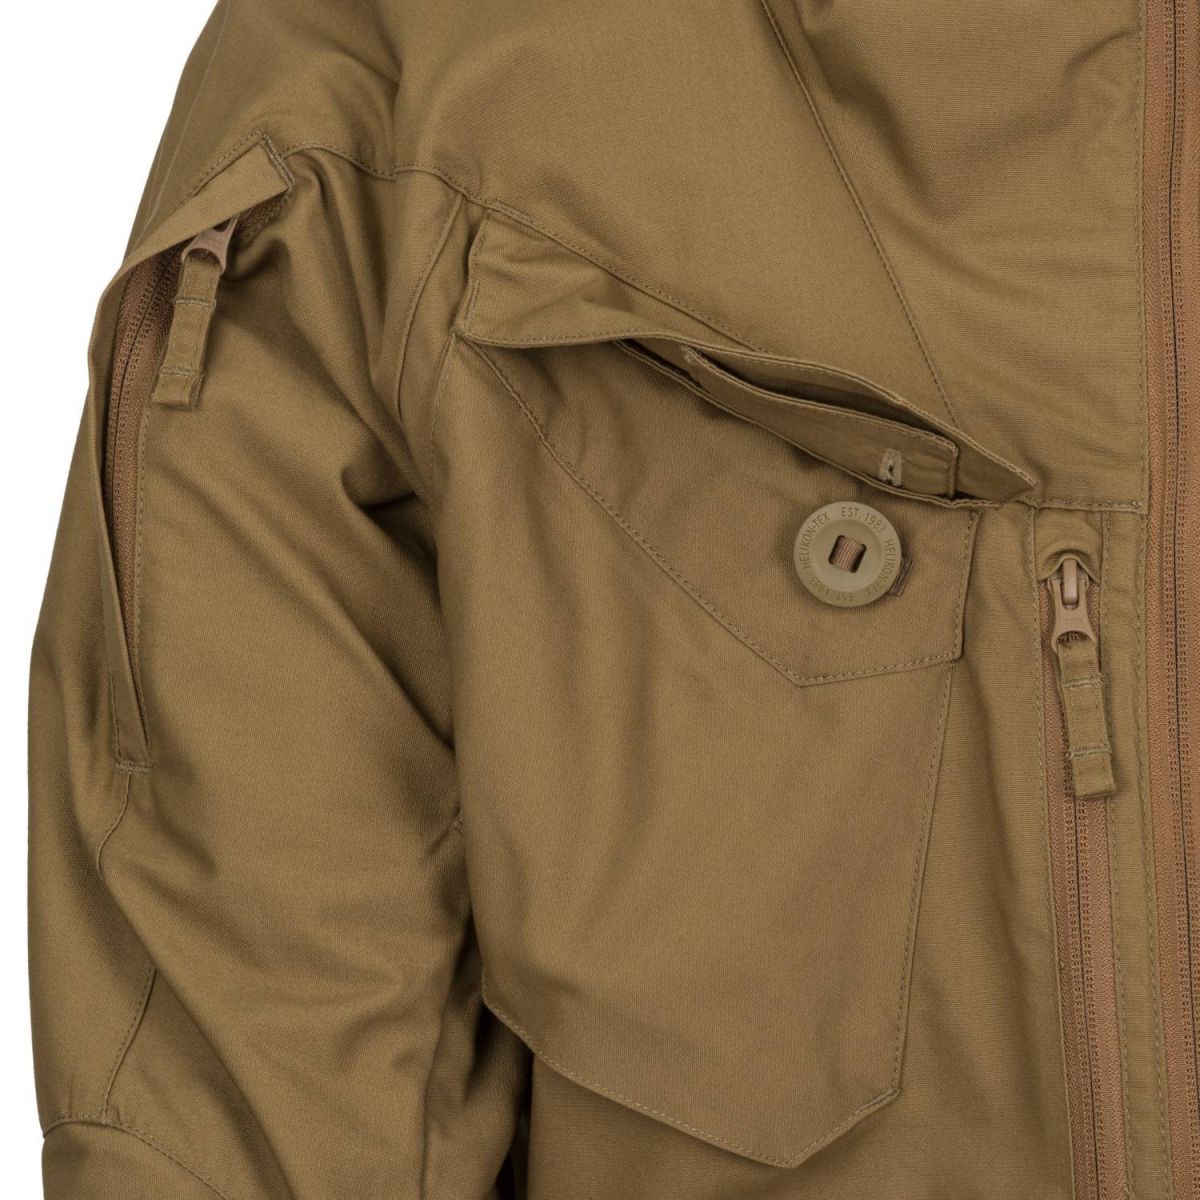 Куртка анорак Helikon-Tex Pilgrim. Цвет Coyote / Койот (L) 9